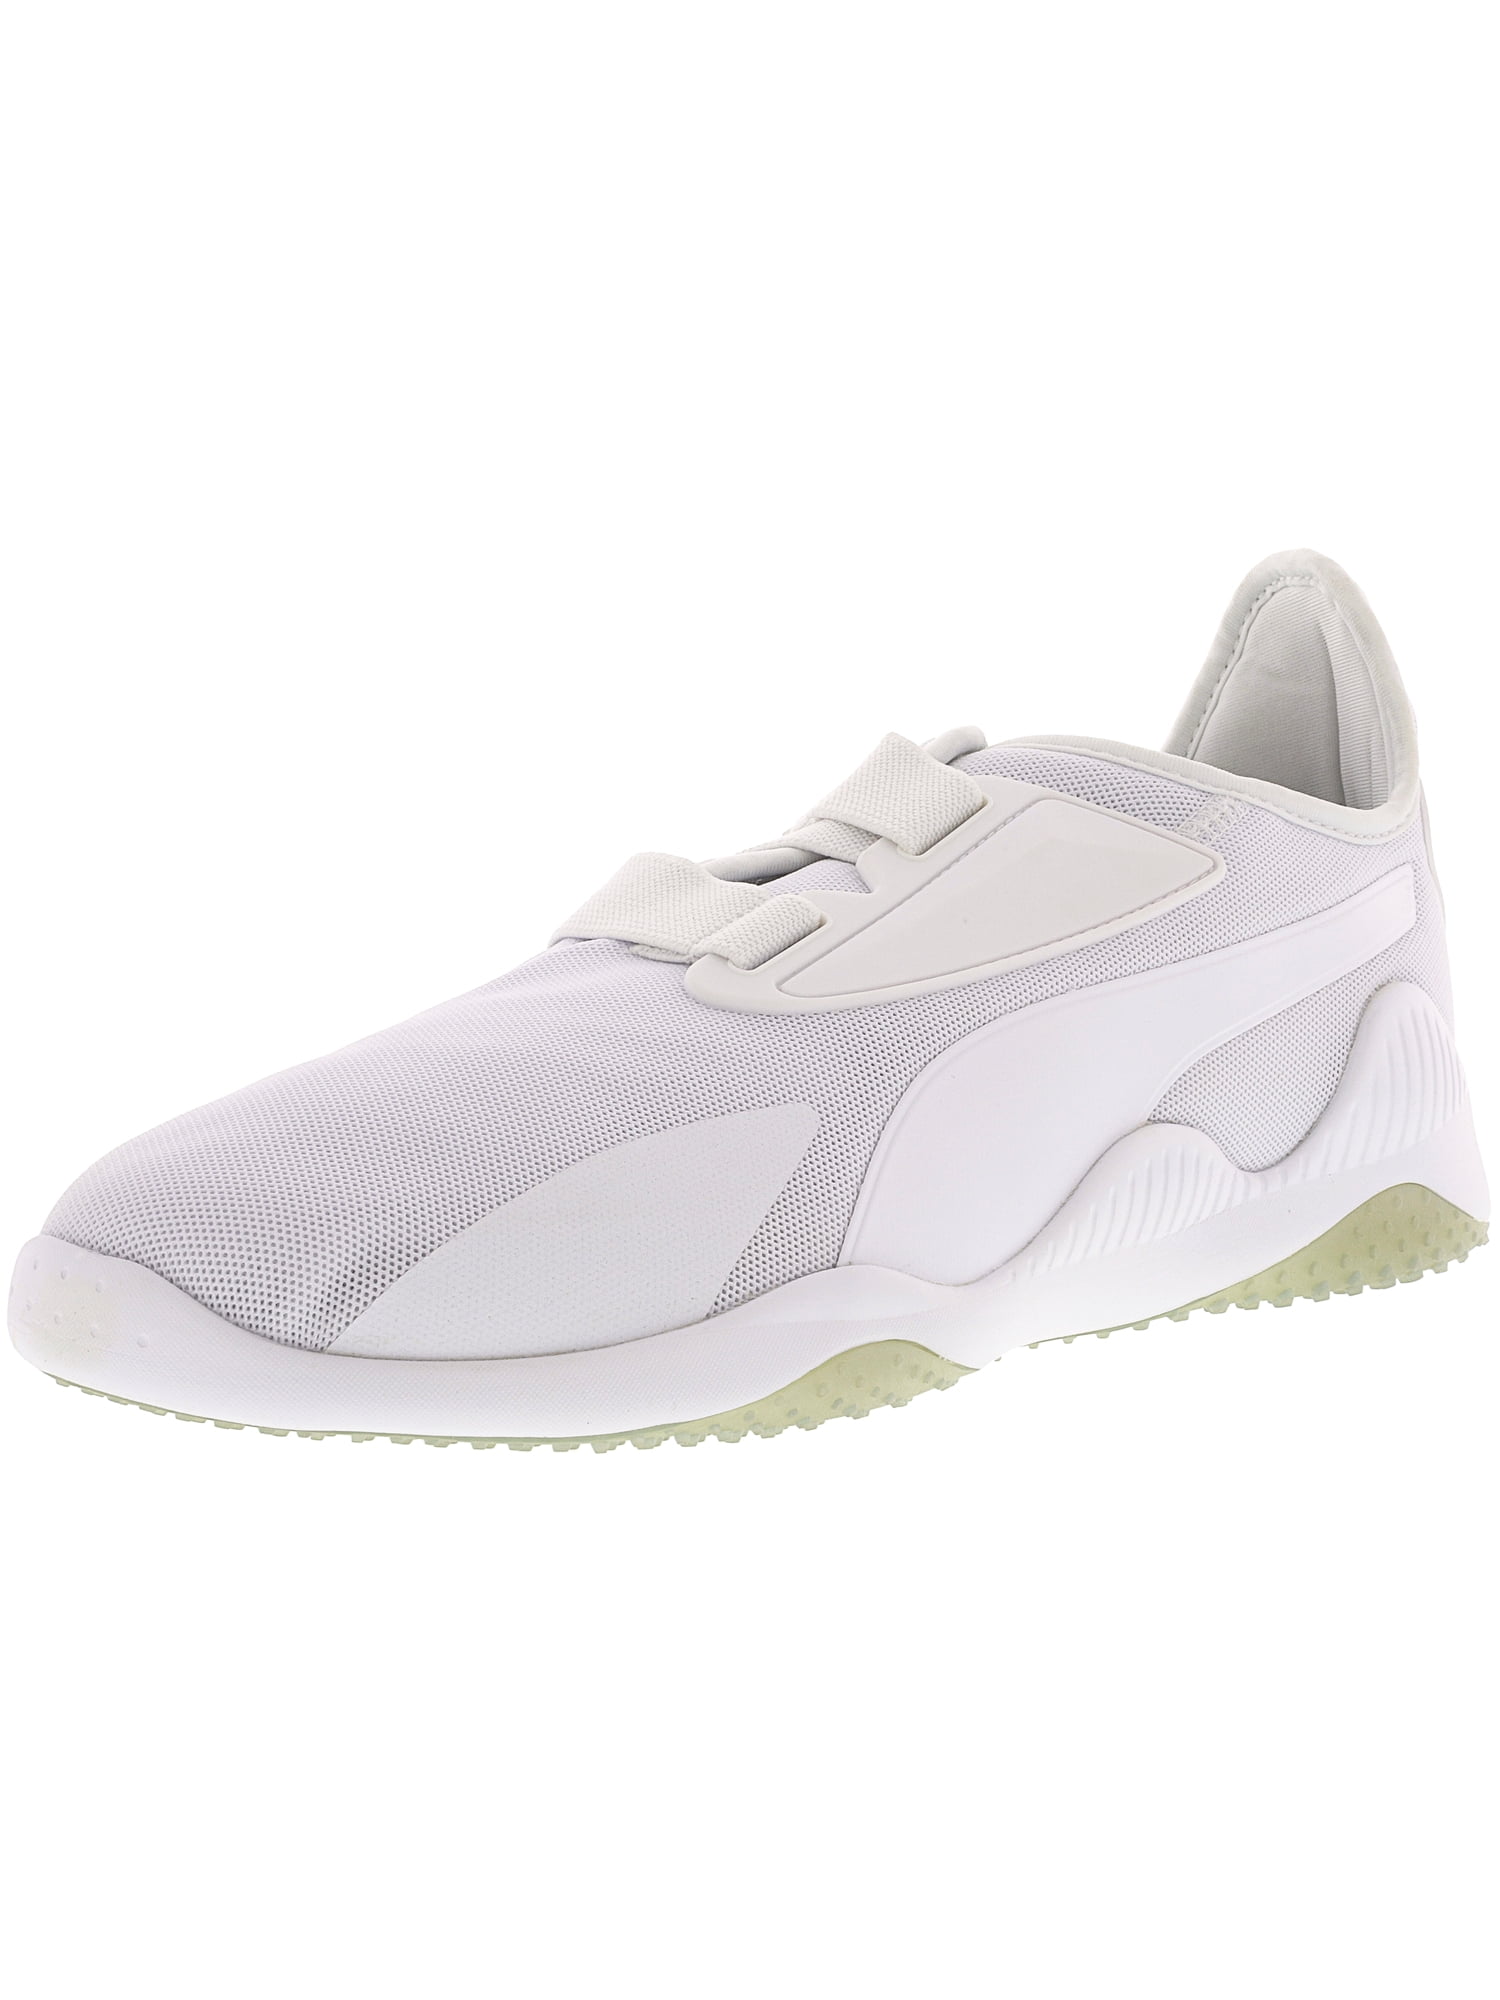 Puma Men's Mostro Mesh White / Ankle-High Fashion Sneaker - 8.5M ...